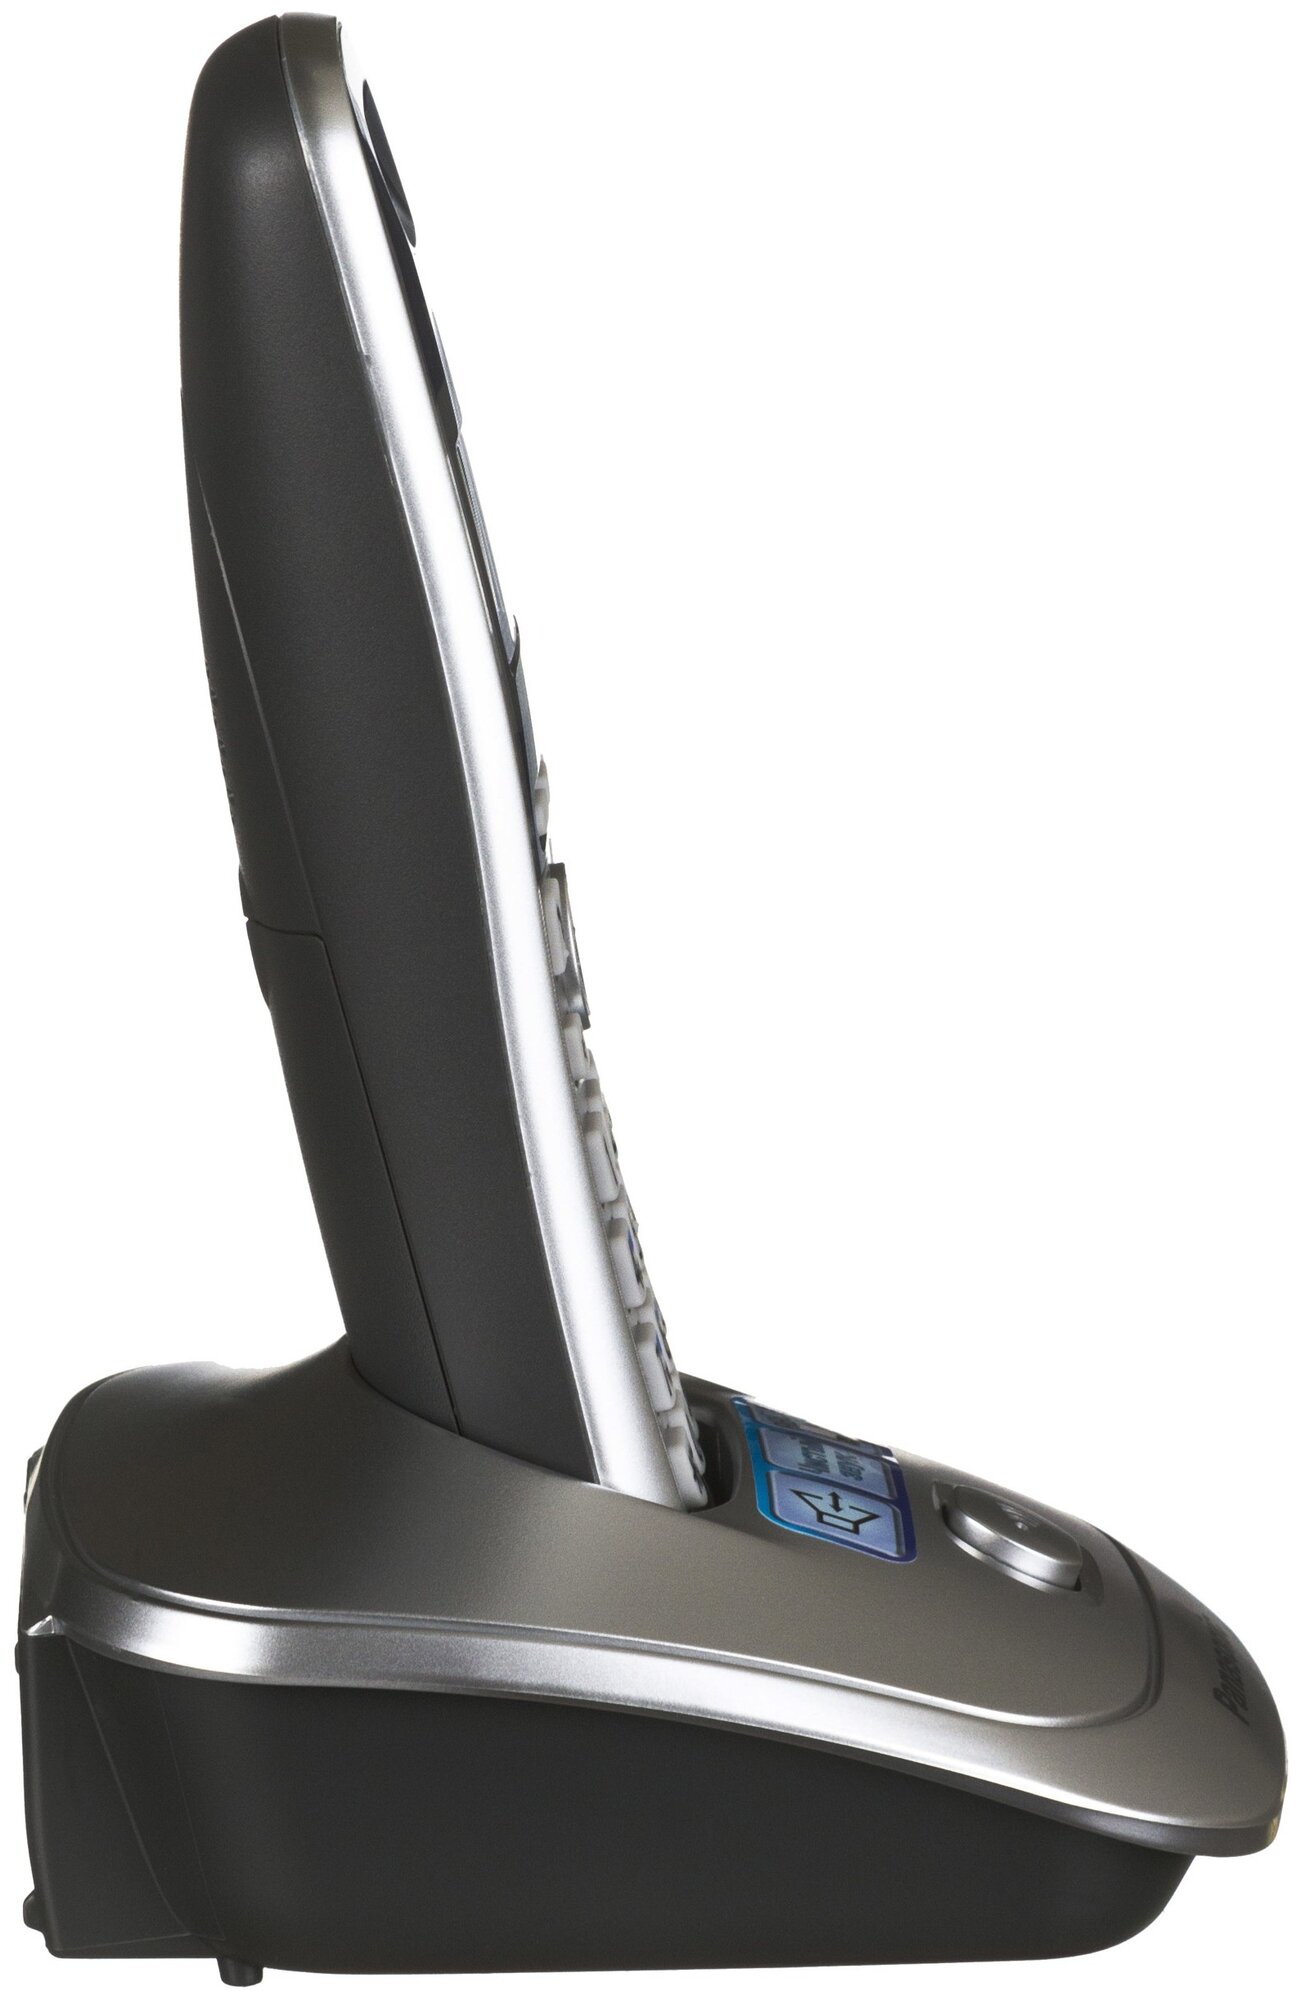 Телефон Panasonic KX-TG2511RUM, DECT (серый металлик)